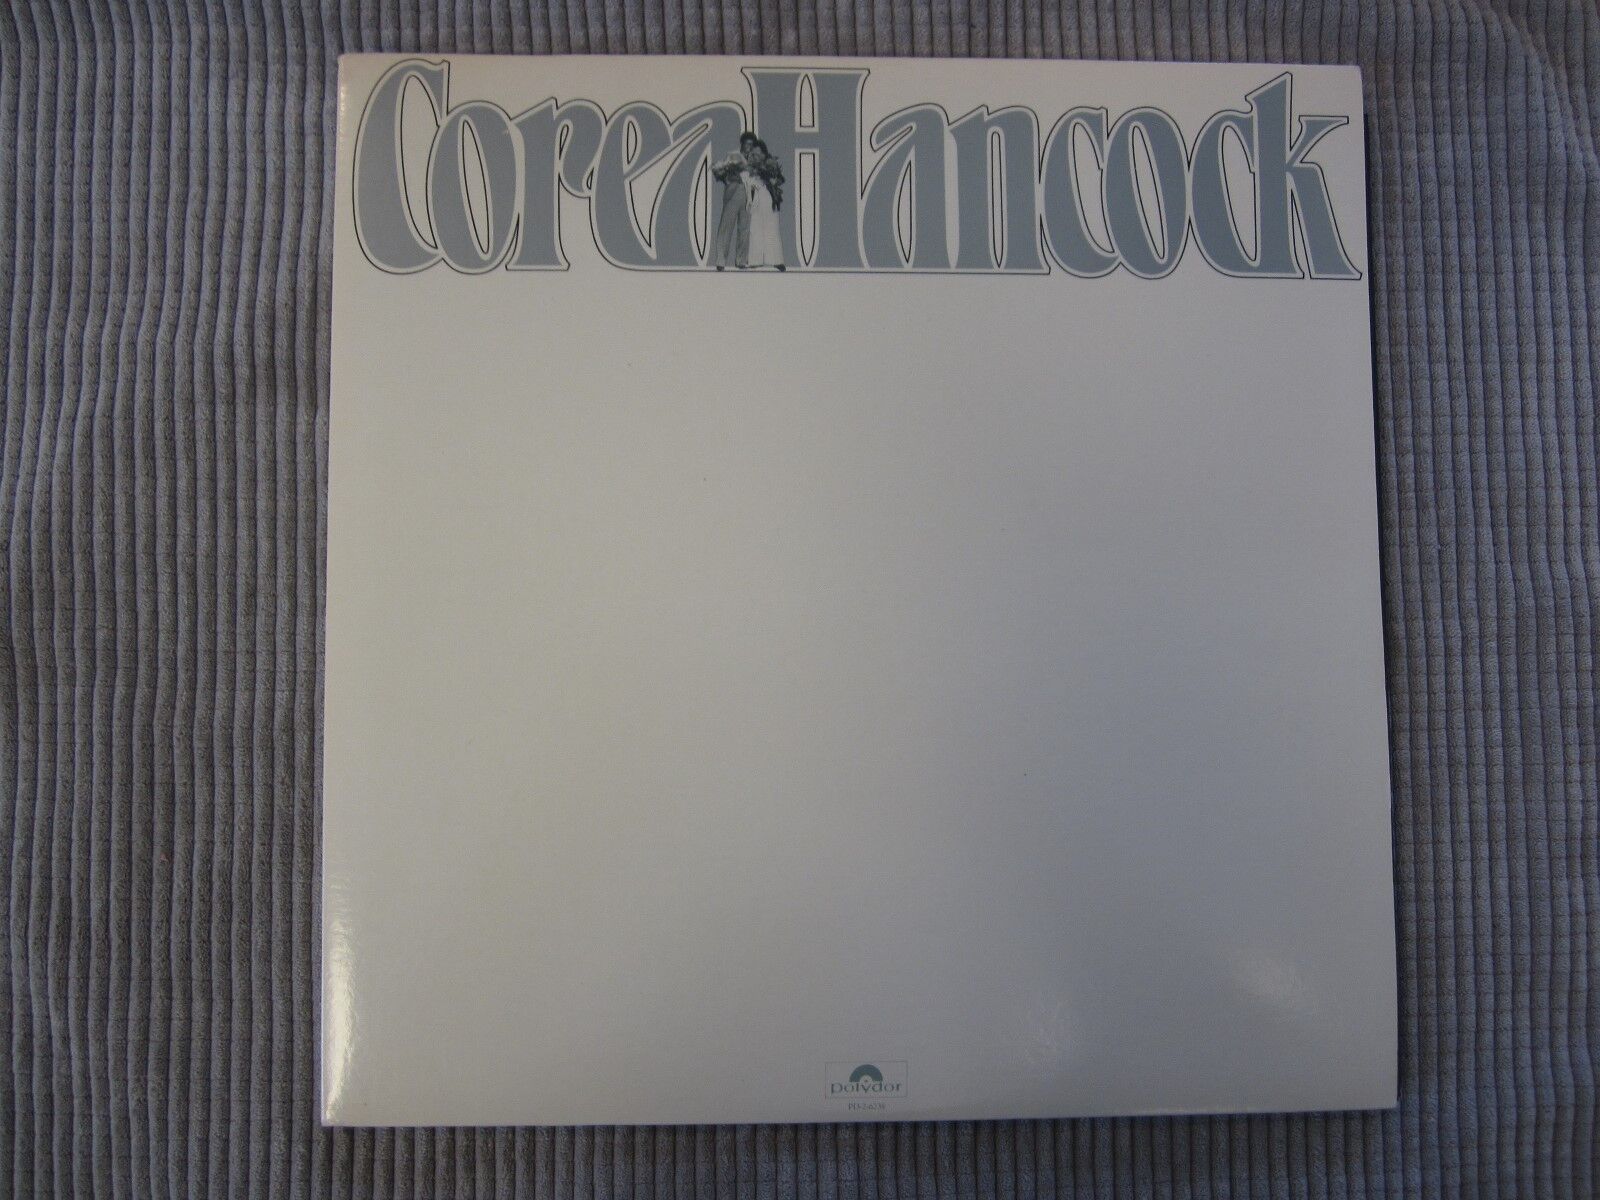 Pic 1 COREA HANCOCK    CHICK COREA & HERBIE HANCOCK  2 VINYL RECORDS / 2 LP'S PROMO